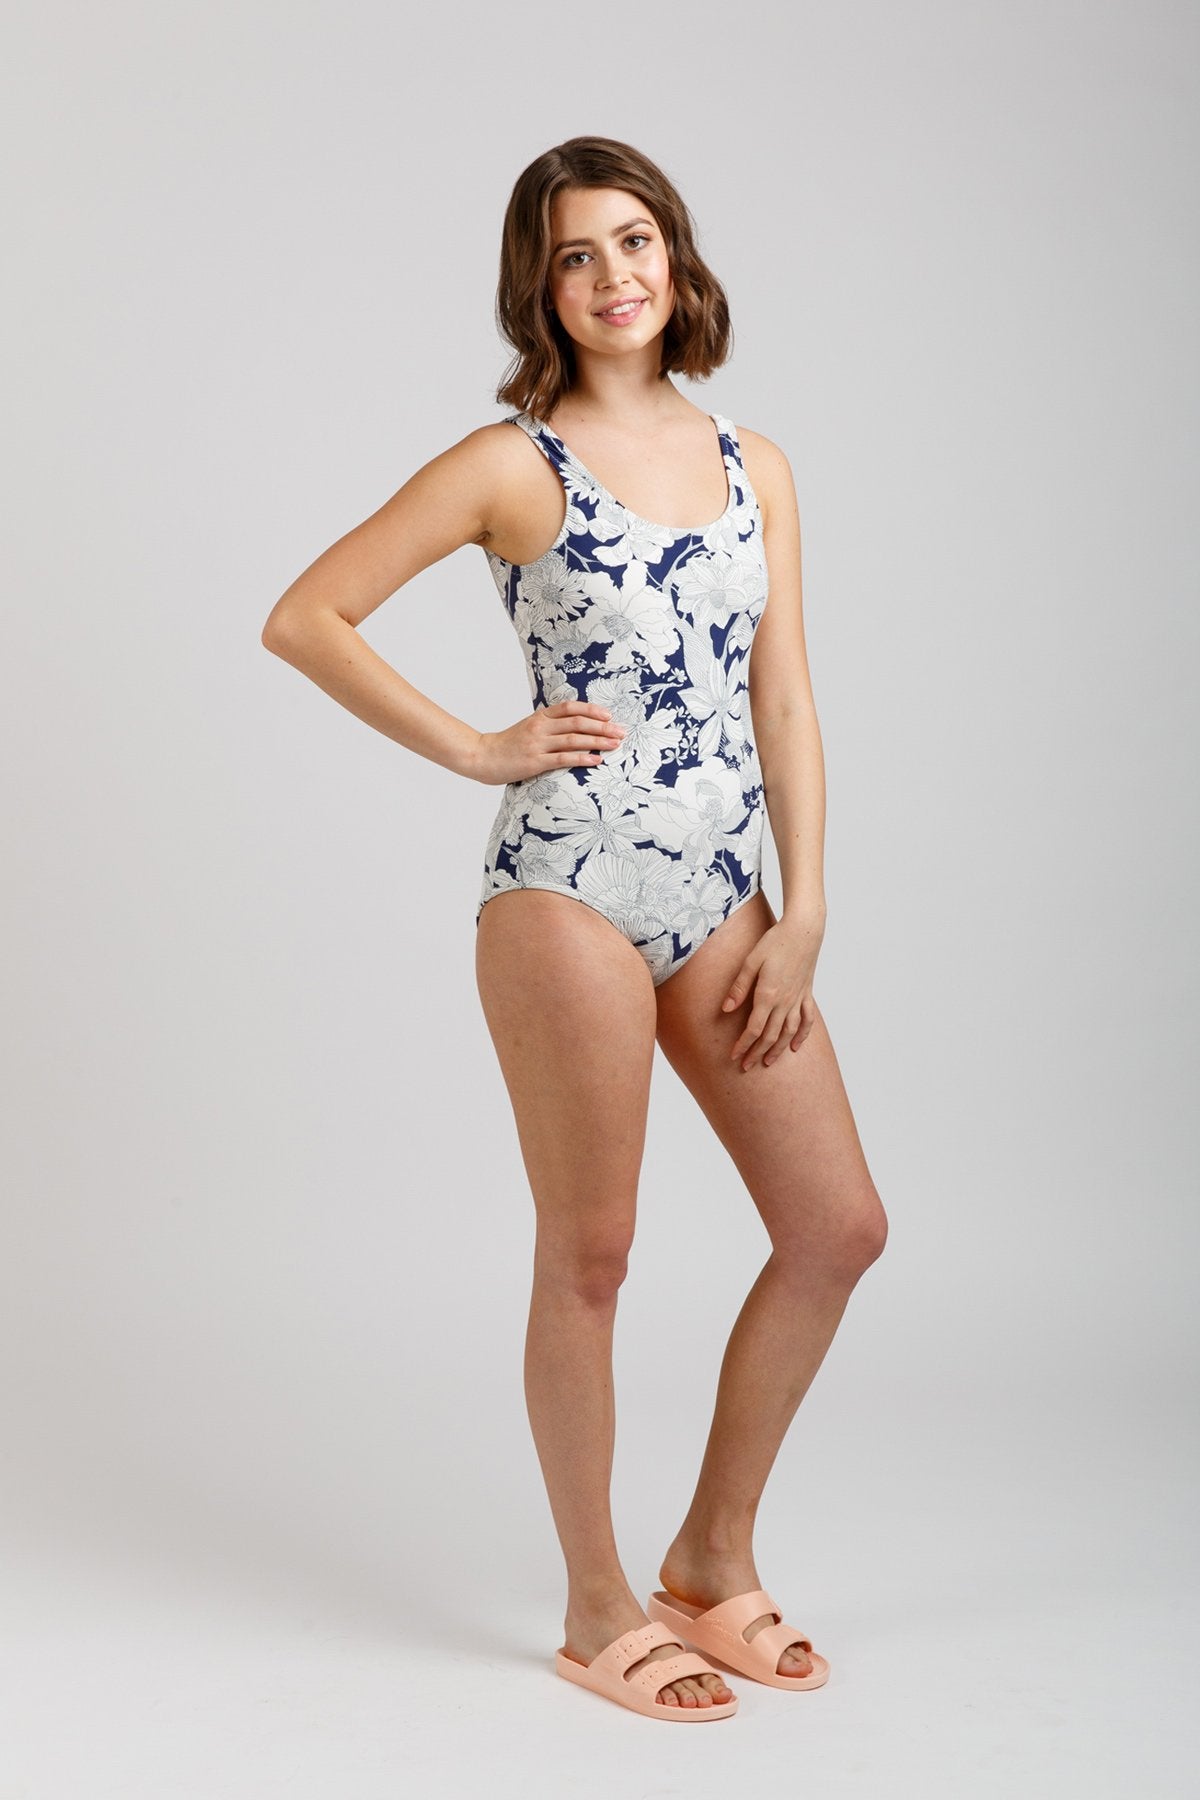 Megan Nielsen Cottesloe Swimsuit and Bikini